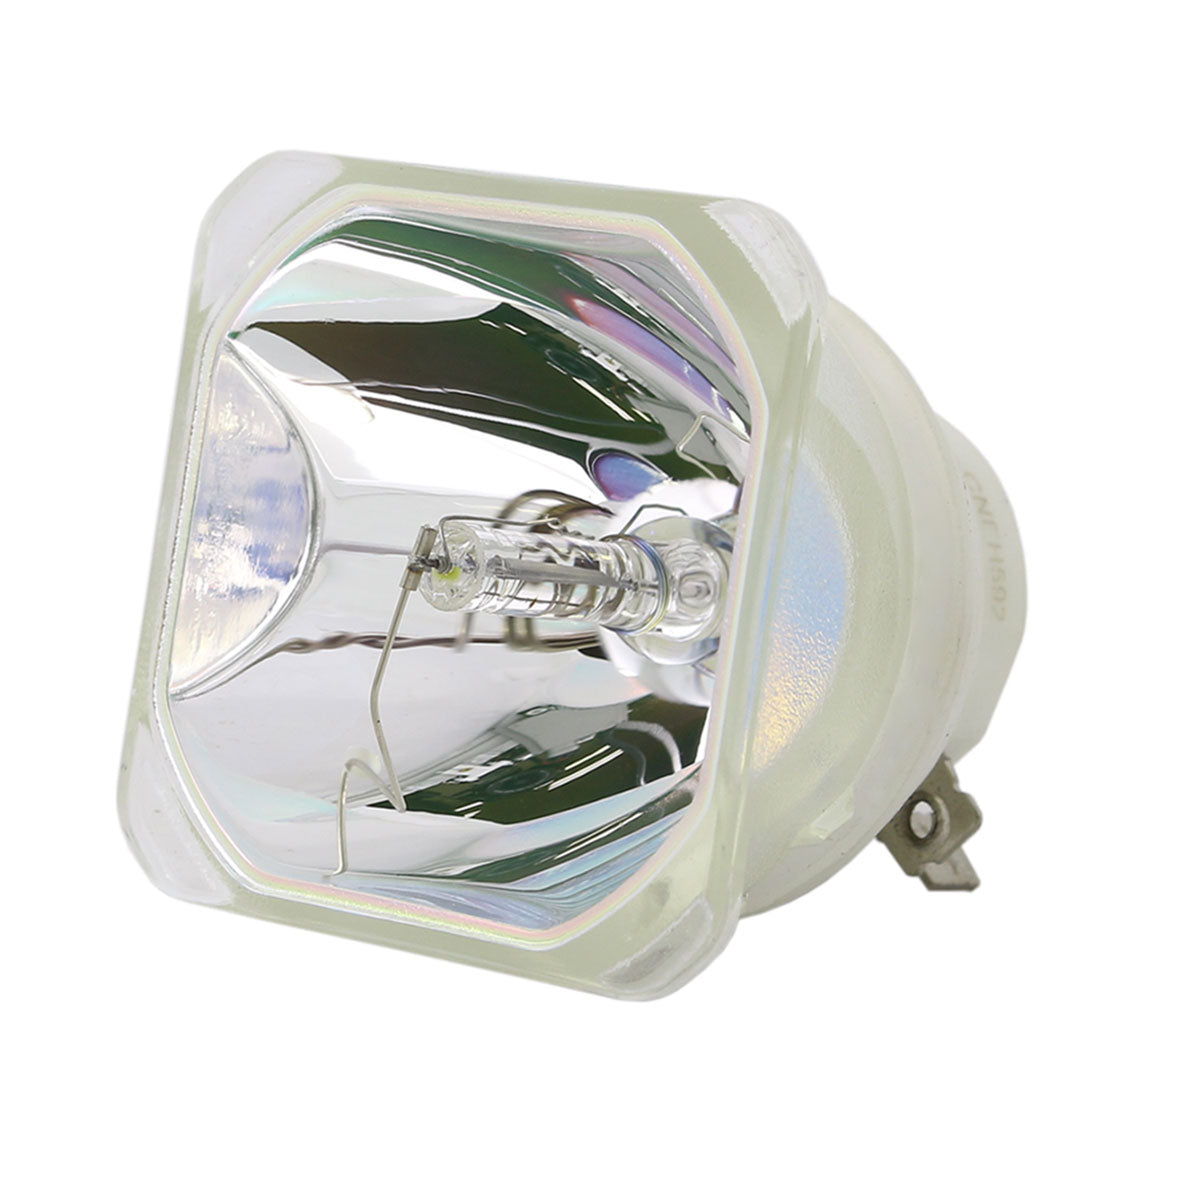 Kindermann 8472 Ushio Projector Bare Lamp